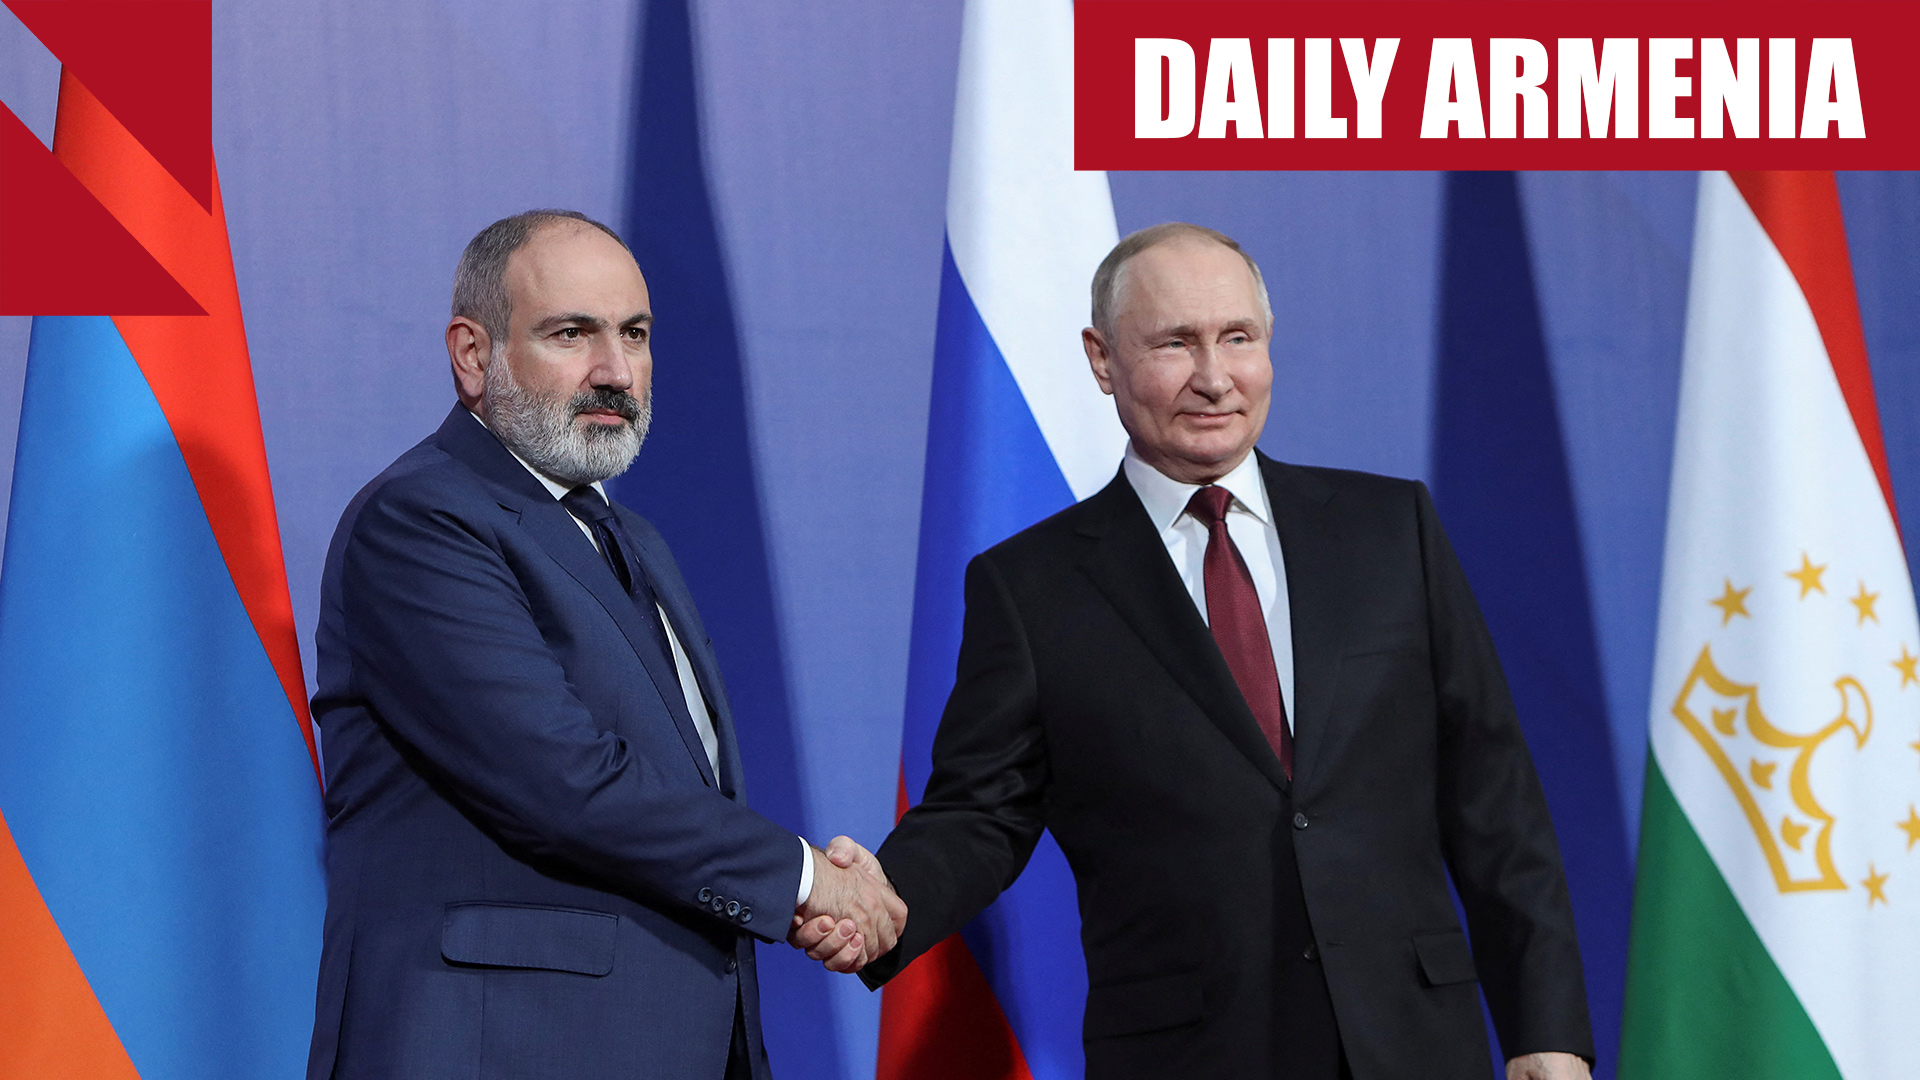 Nikol-Pashinyan-ends-boycott-by-attending-key-Russian-summit